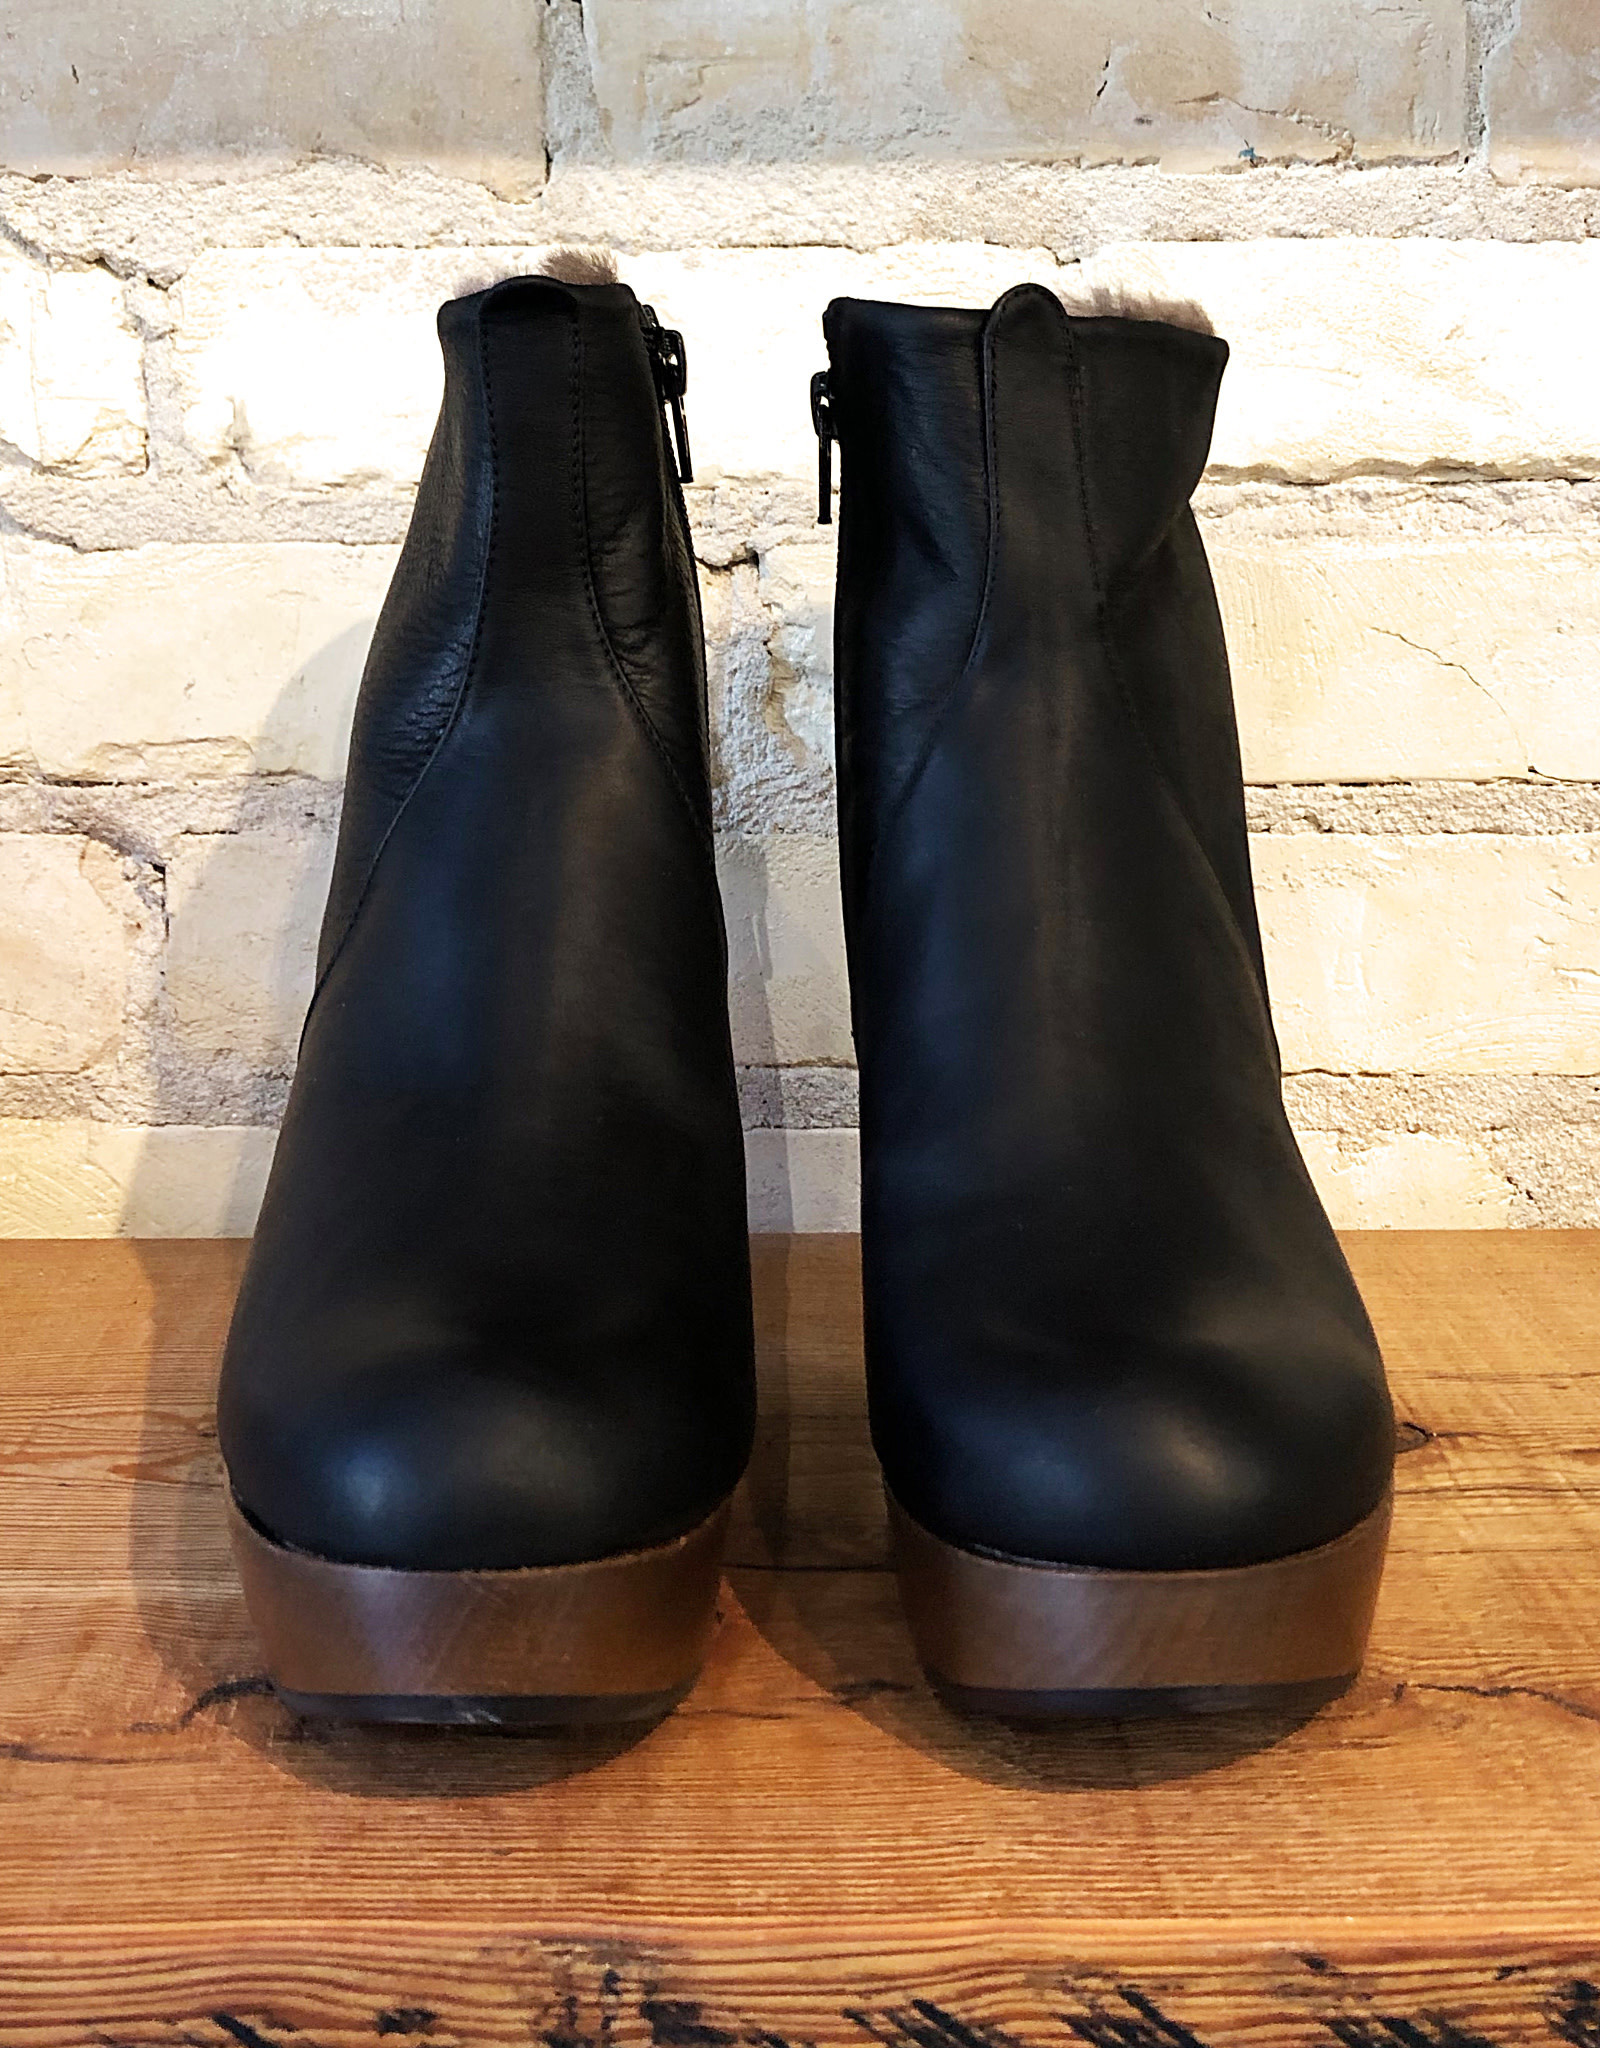 Coclico Shearling-lined Ringo Black Tau Boots